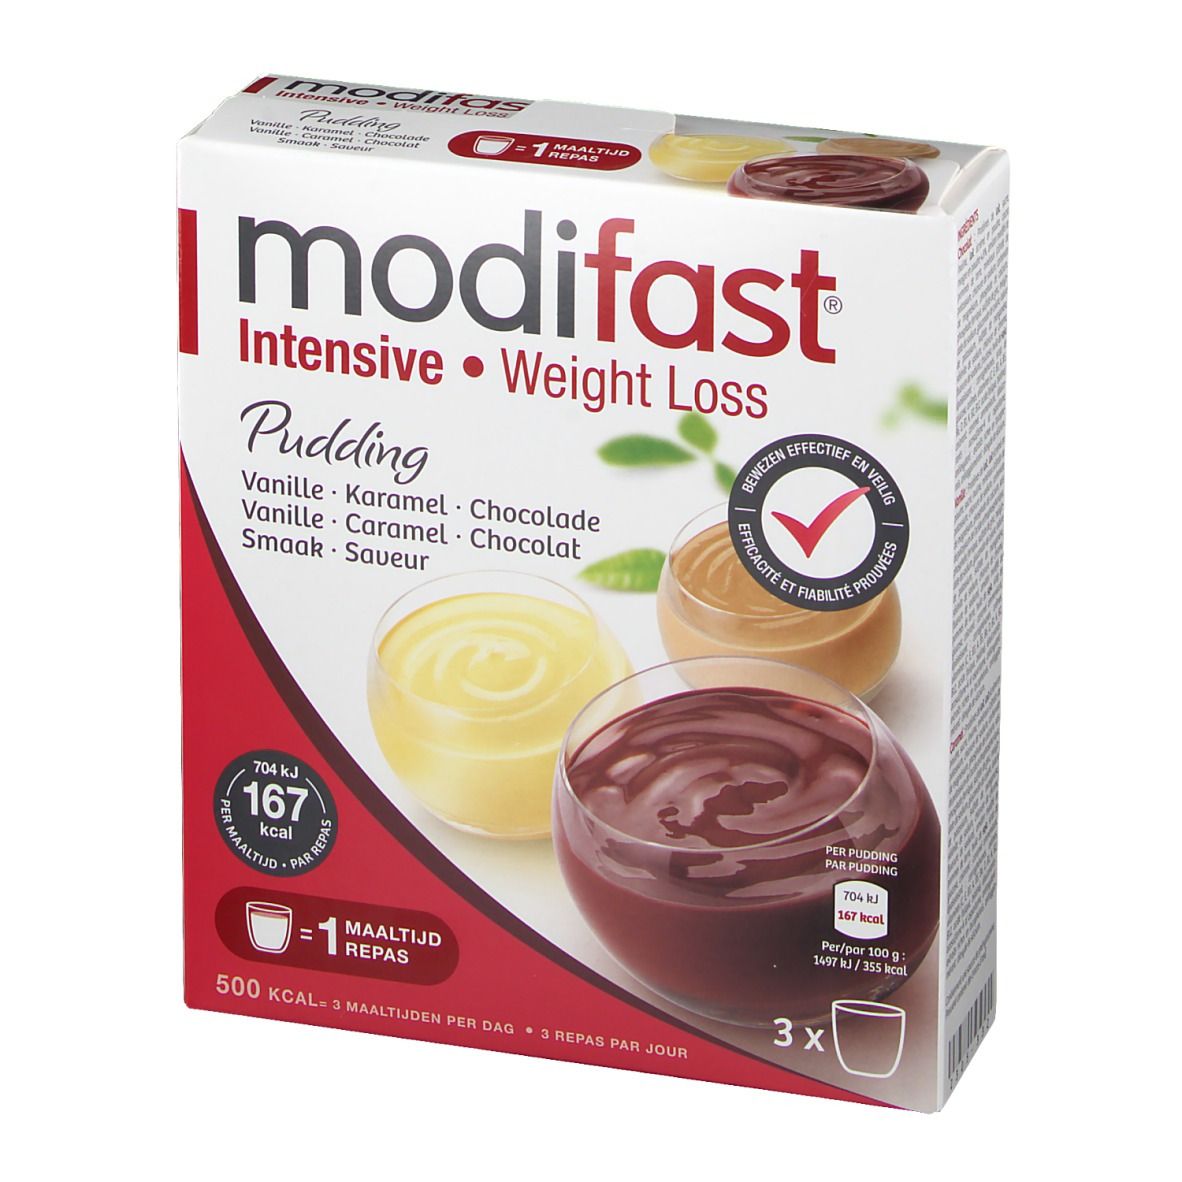 Modifast Intensive Pudding 3-Pack Chocolat-Caramel-Vanille